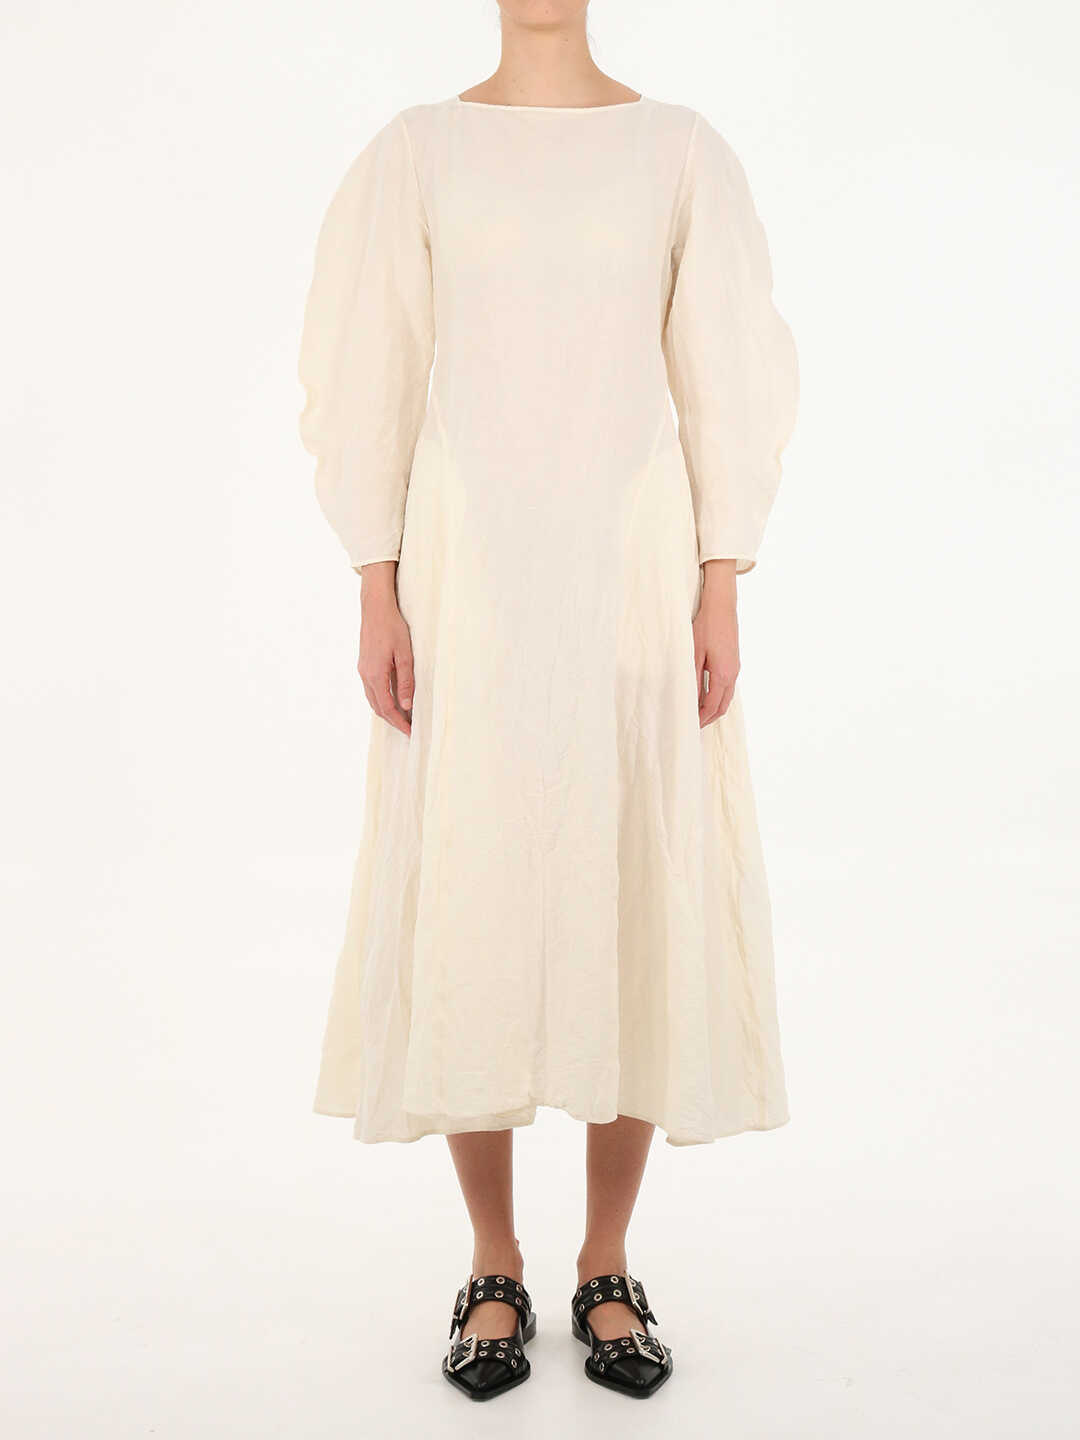 Jil Sander Washed Effect White Dress JSPU503105 WU330800 Cream